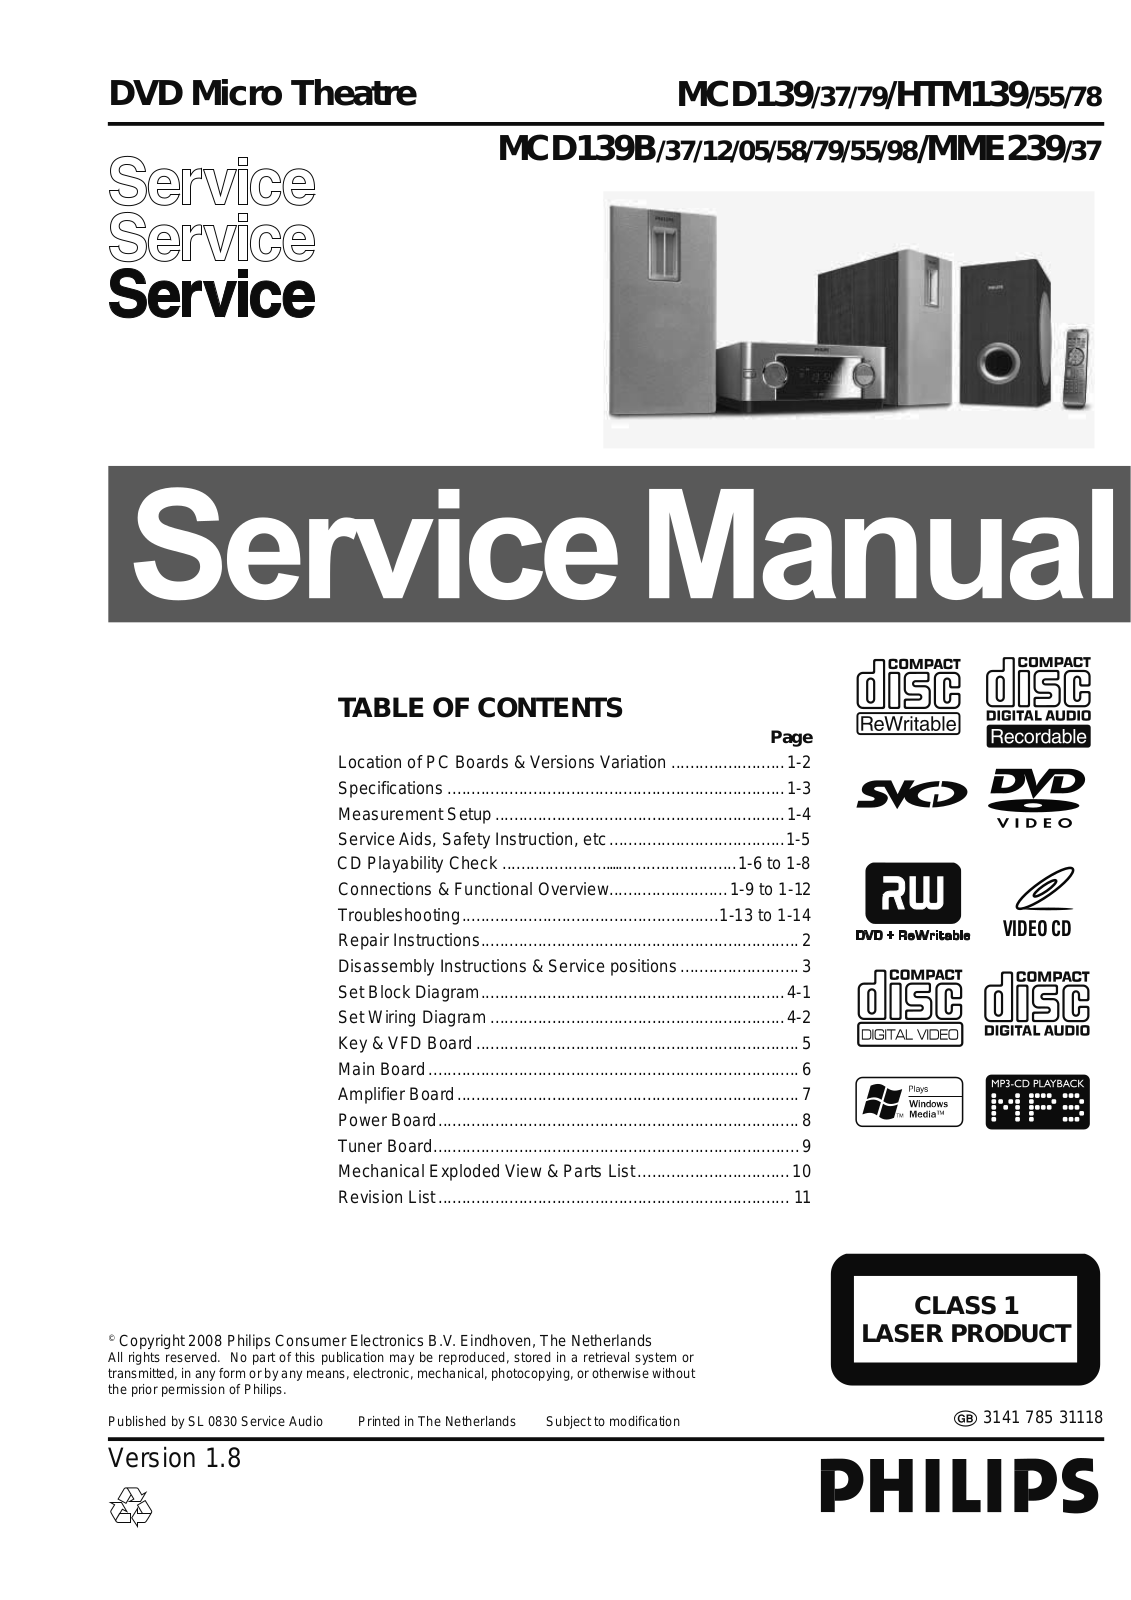 Philips MCD139-37, MCD139-79, HTM139-55, HTM139-78, MCD139B-37 Service Manual